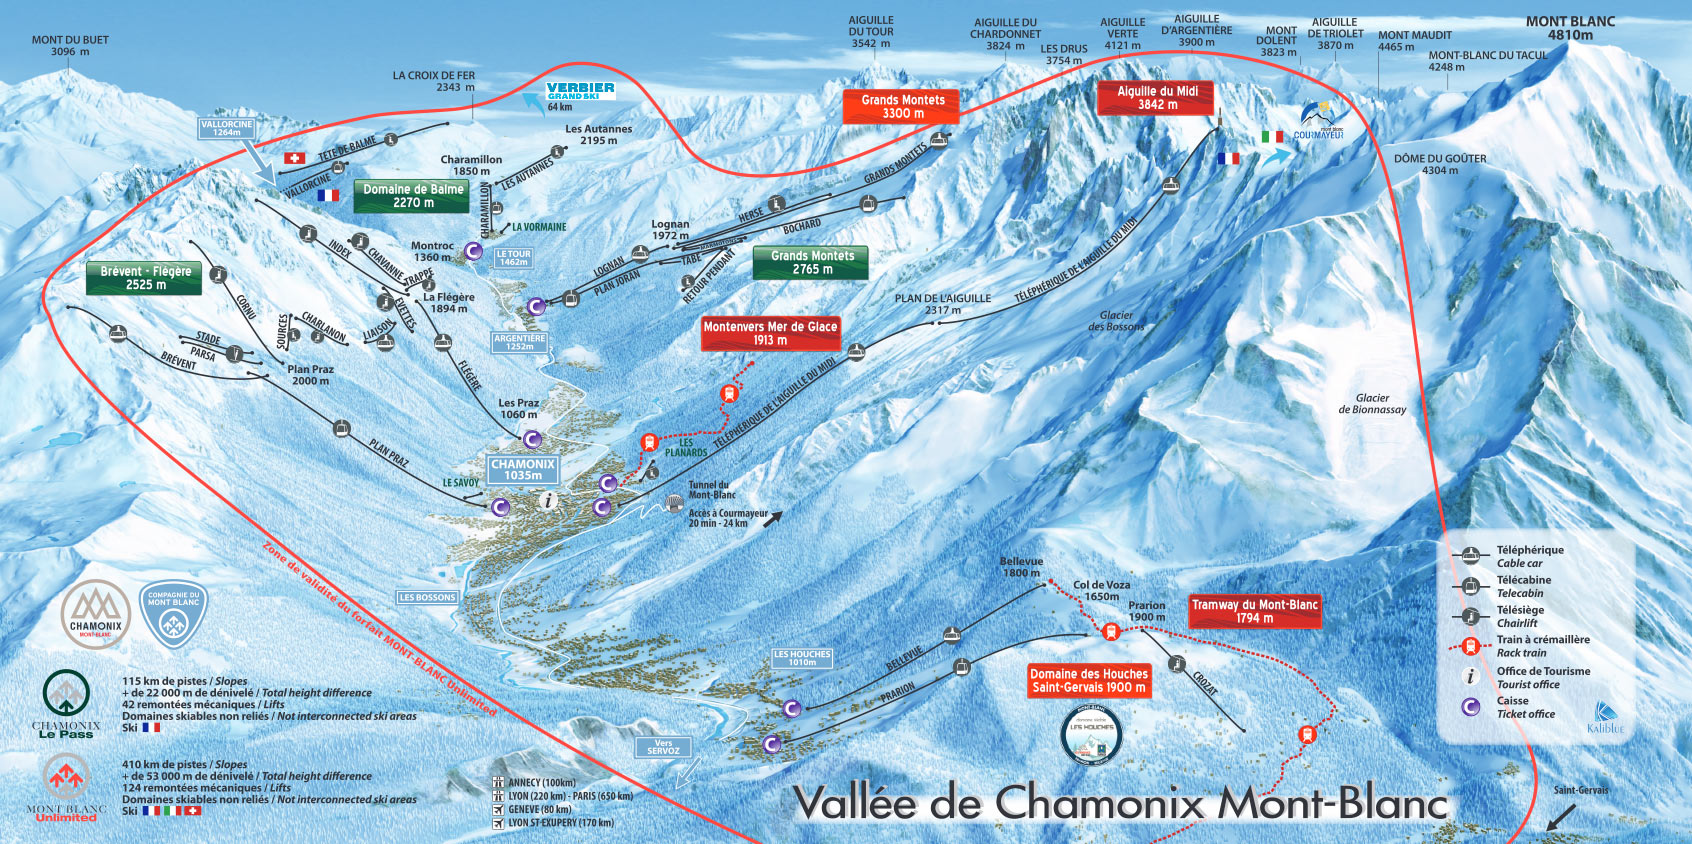 Chamonix Ski Resort Guide Location Map Chamonix Ski Holiday with regard to How To Ski Chamonix